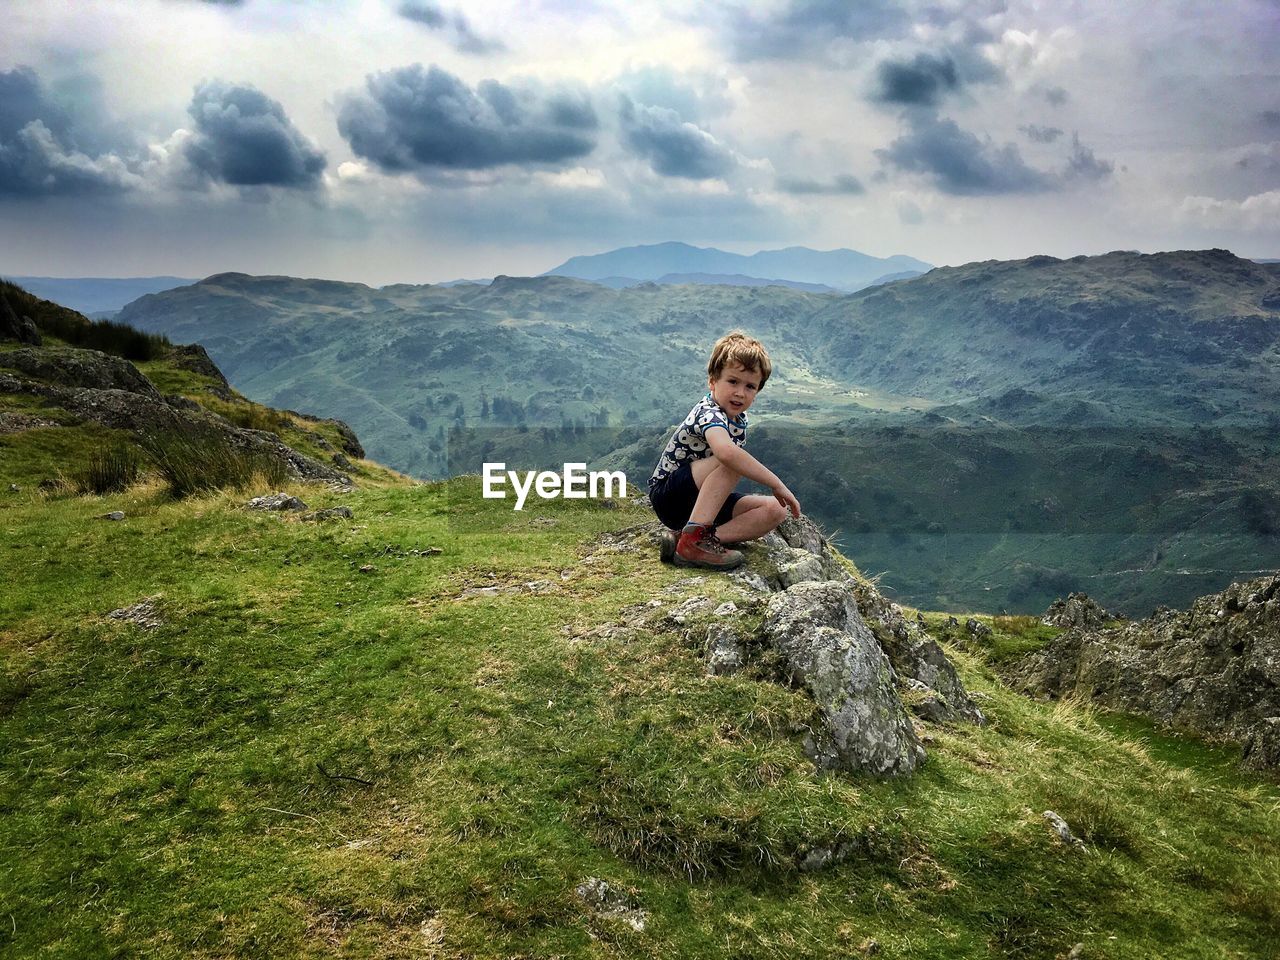 View of boy sitting on mountain